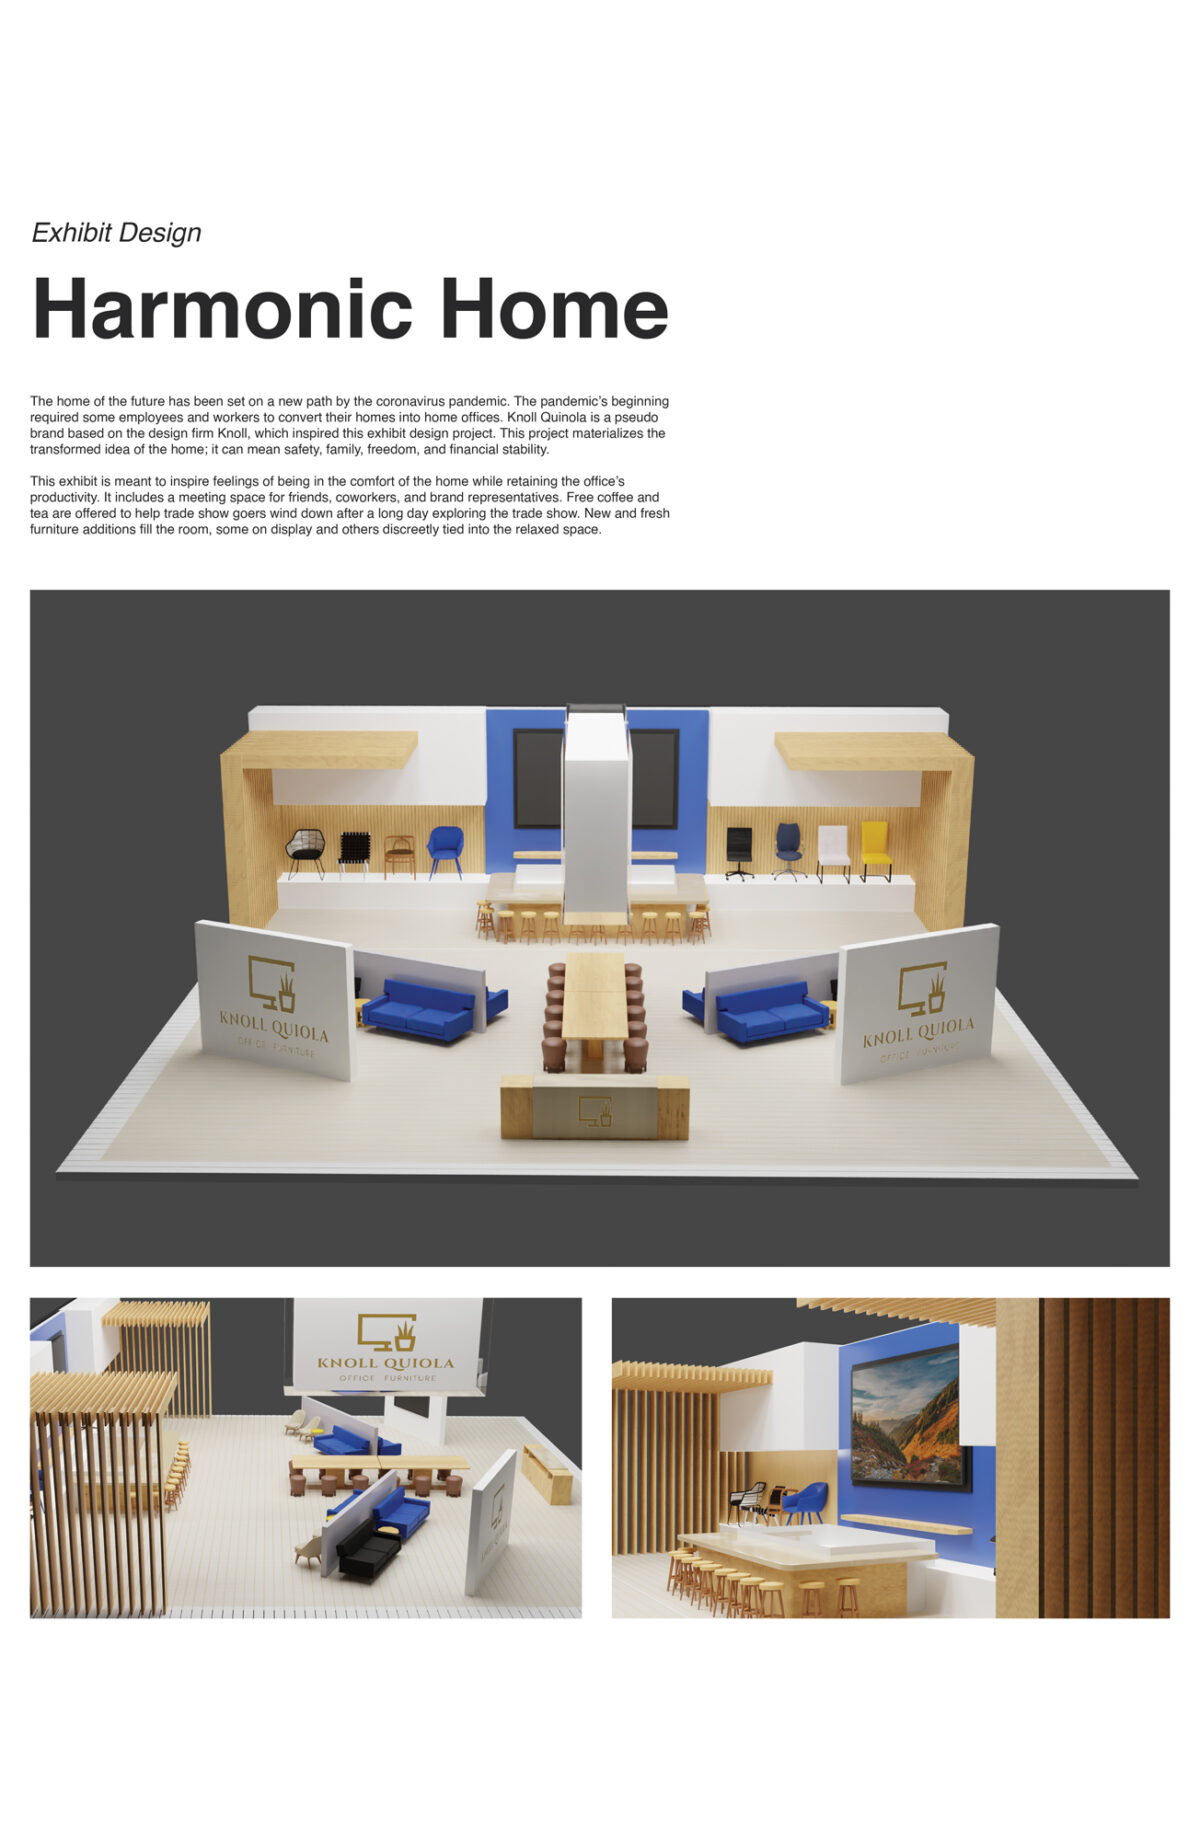 Harmonic Home